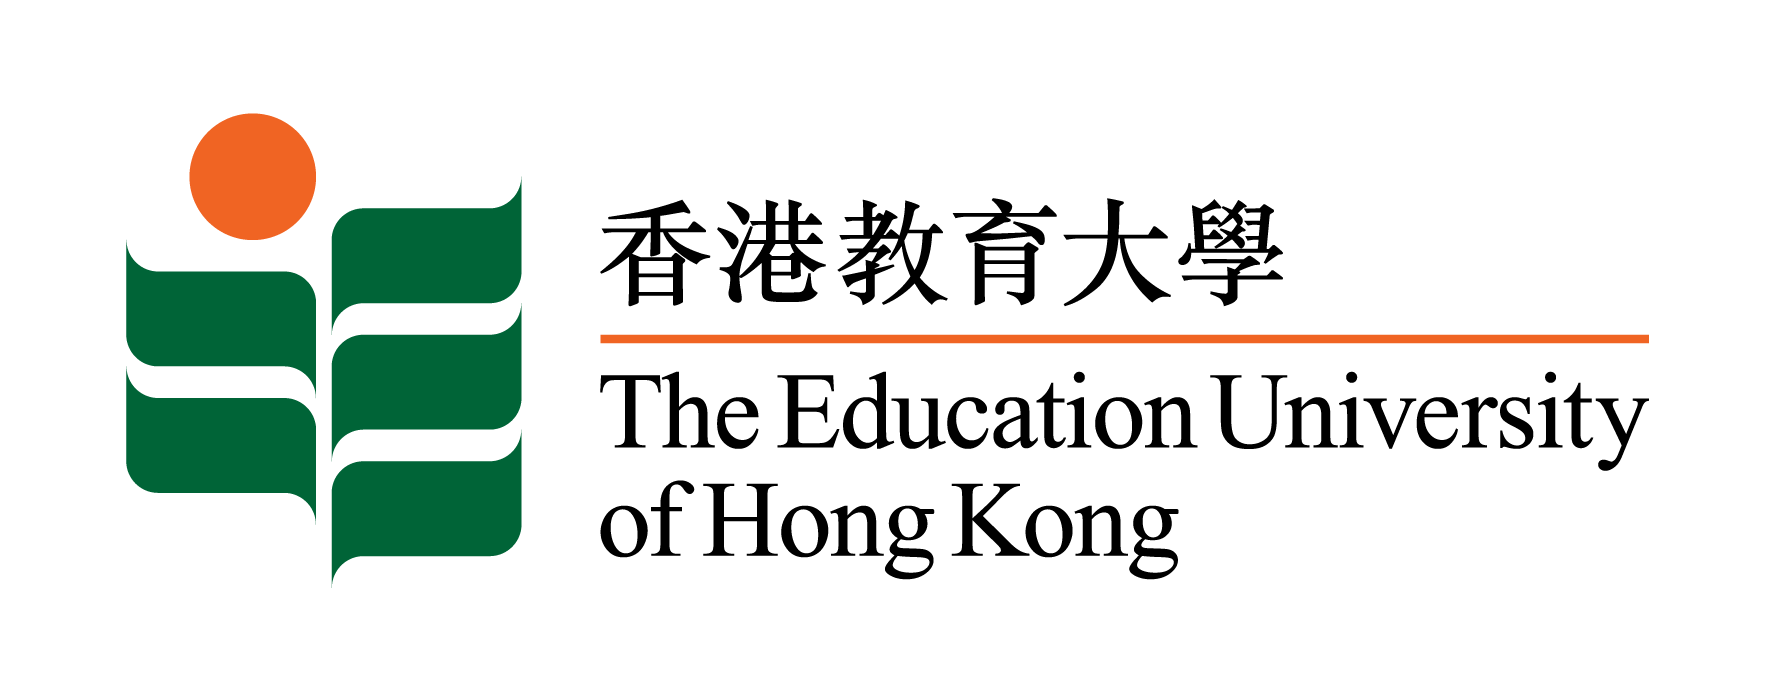 College of Education U of L Logo - The Education University of Hong Kong (EdUHK)